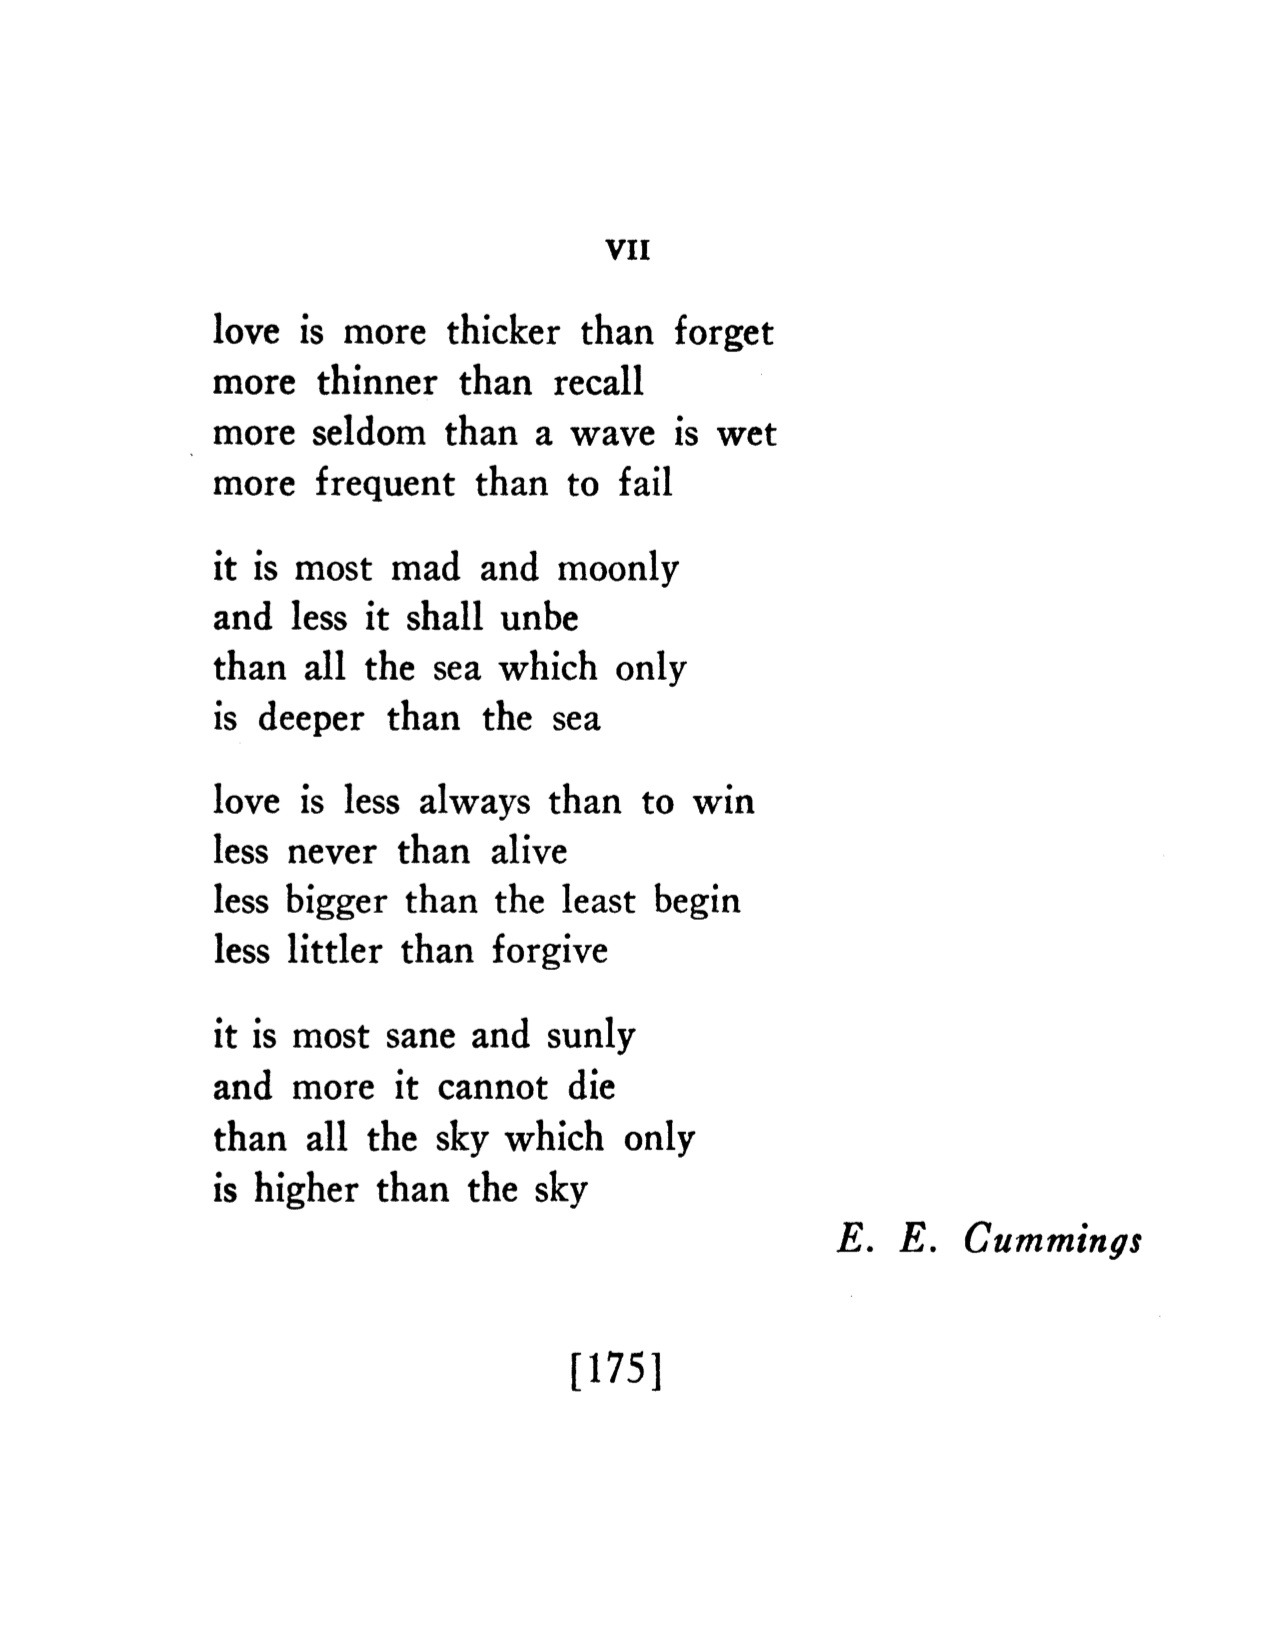 POETRY since 1912 - â€“E.E. Cummings, Poetry, January 1939 Cummings ...